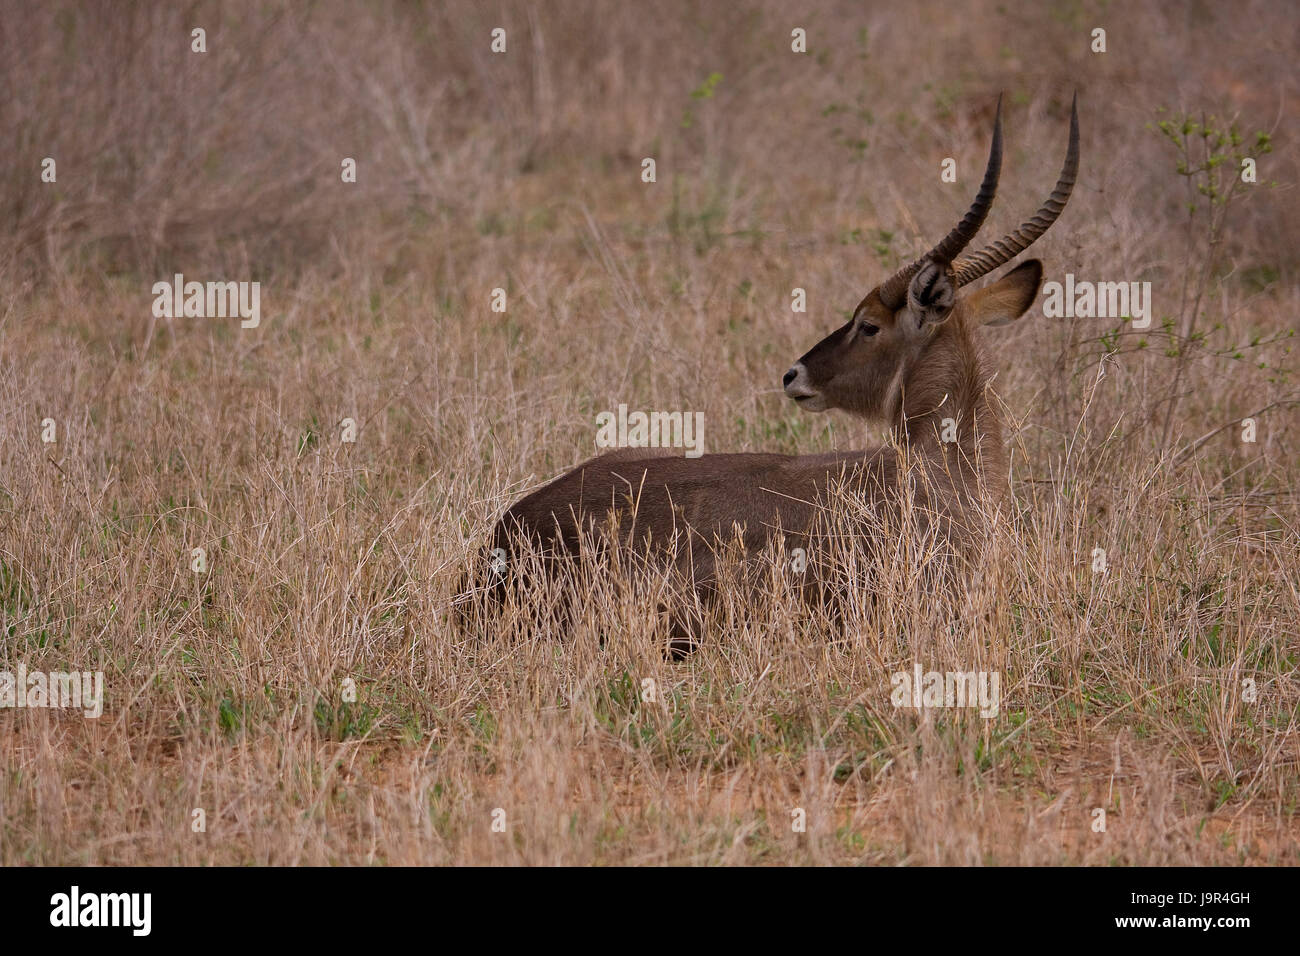 national park, africa, kenya, wildlife, safari, antelope, gazelle, tanzania, Stock Photo